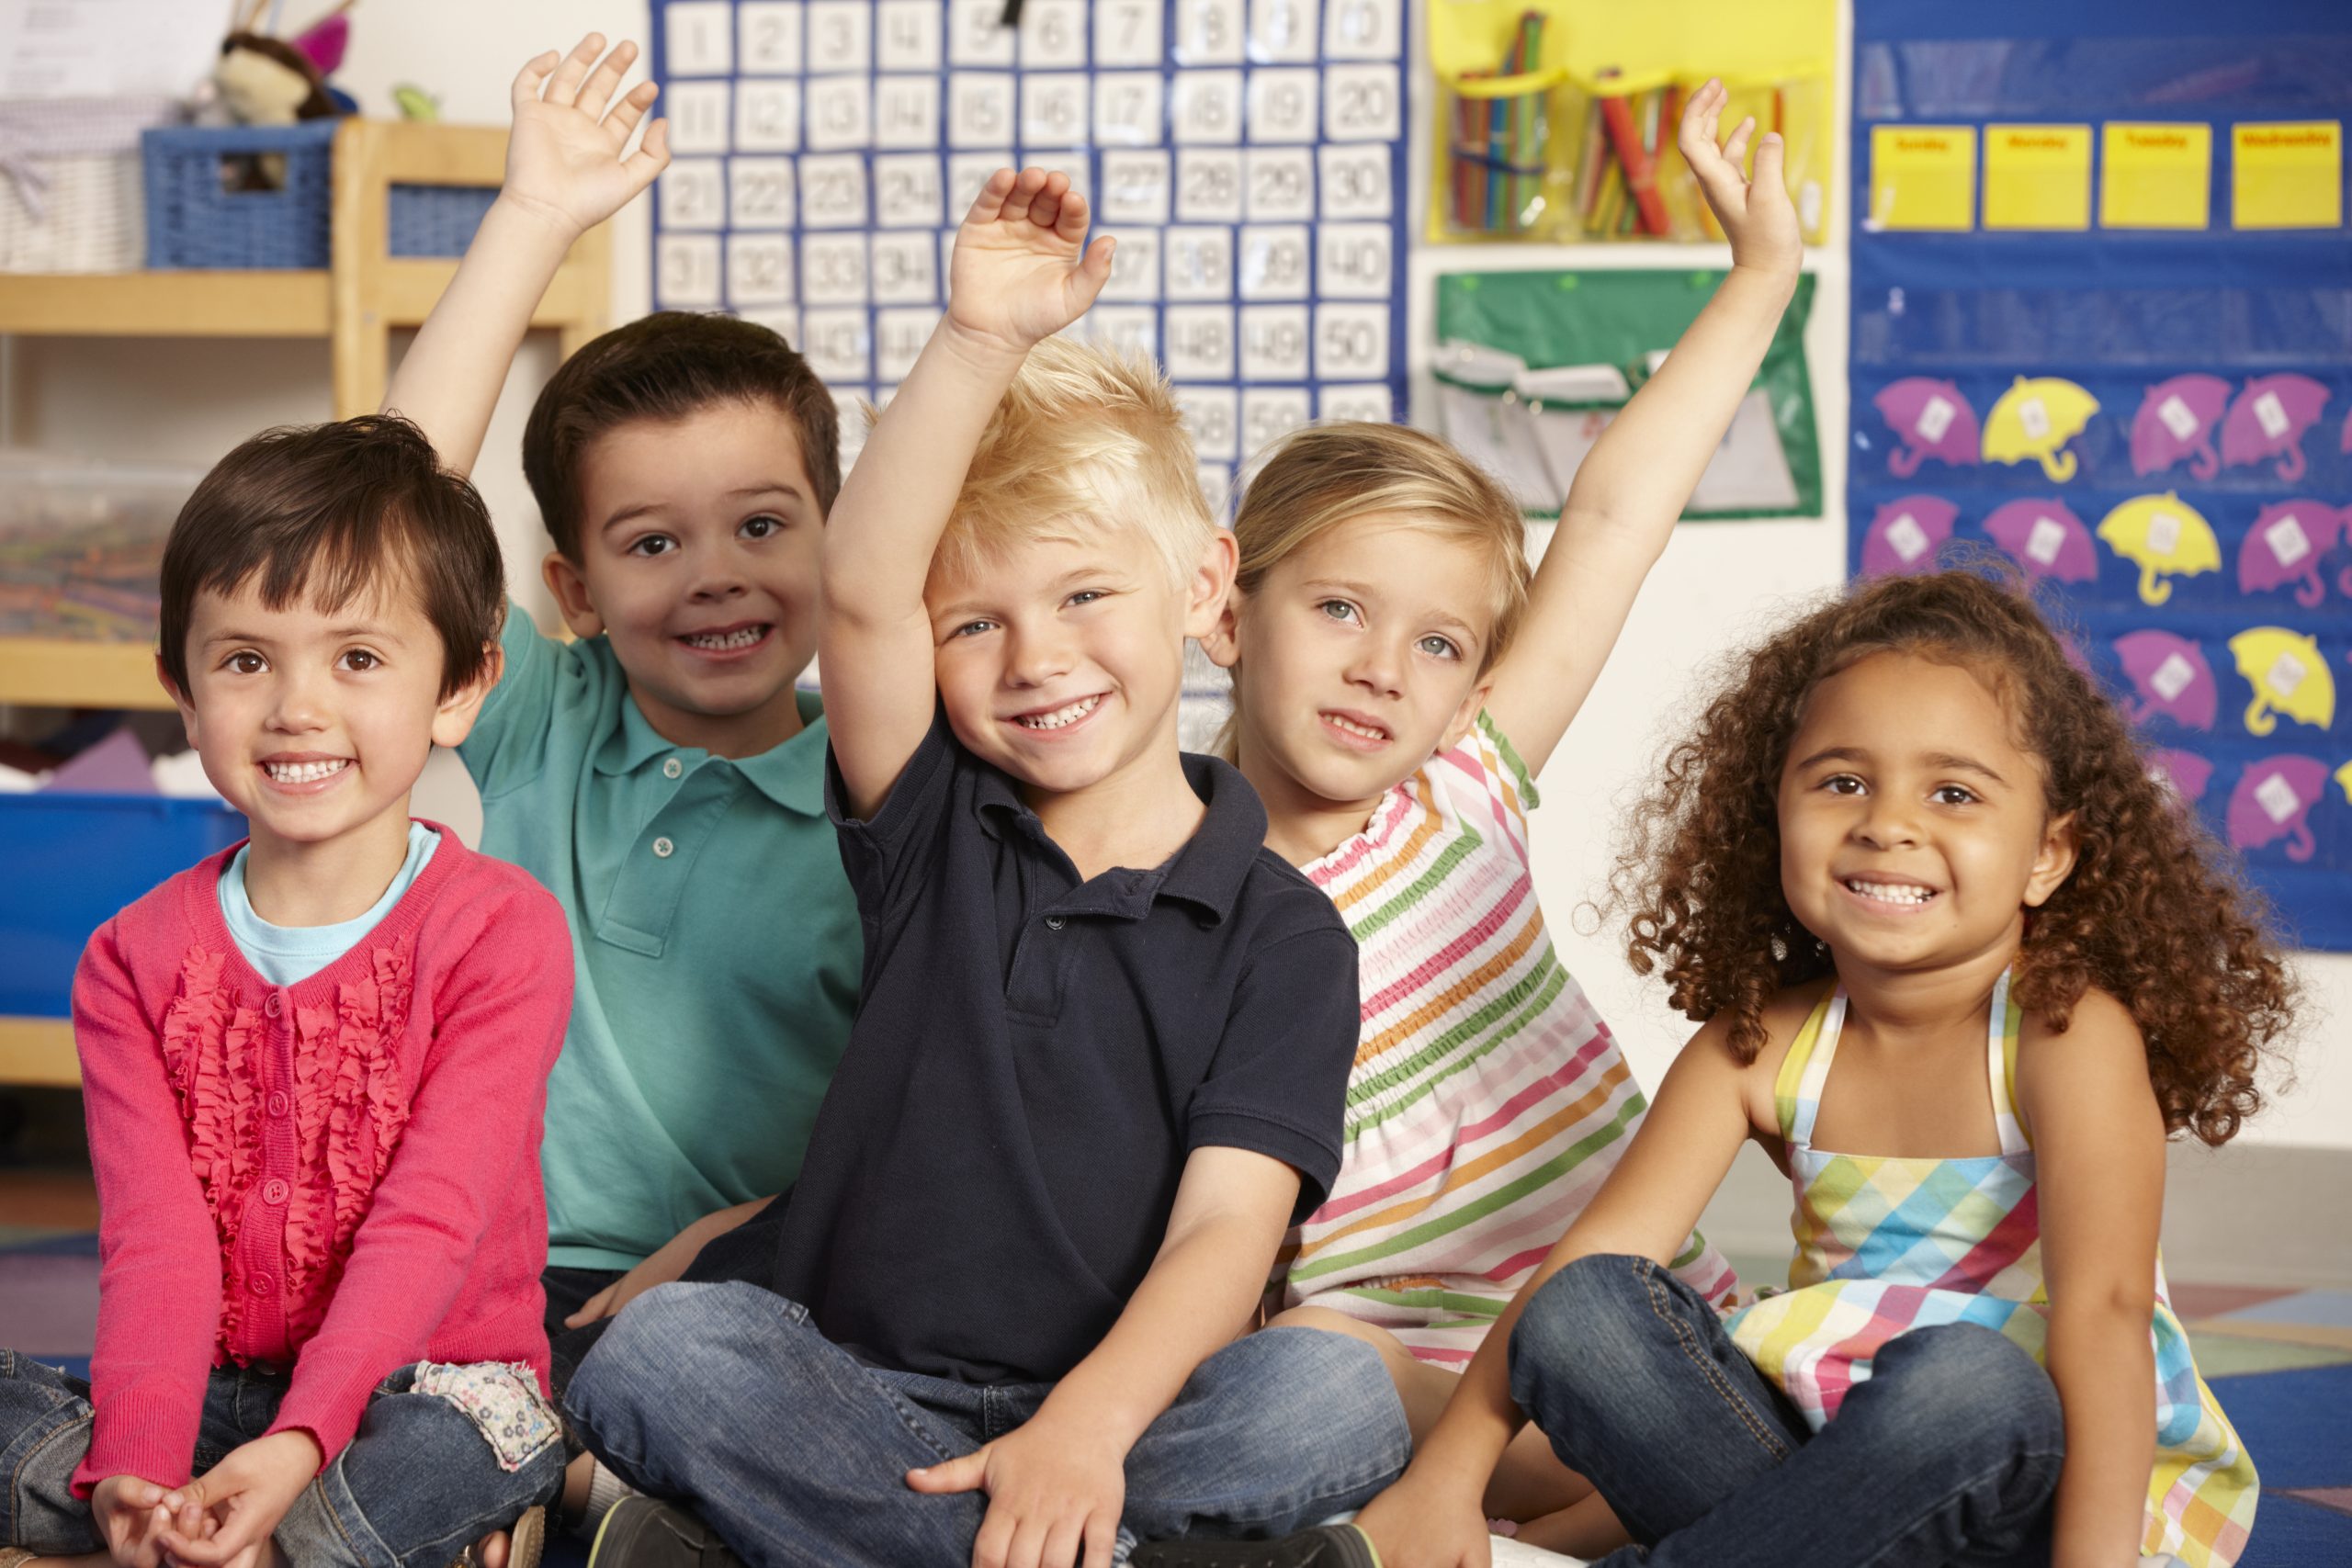 Group of kindergarten children, 3 with their hands raised